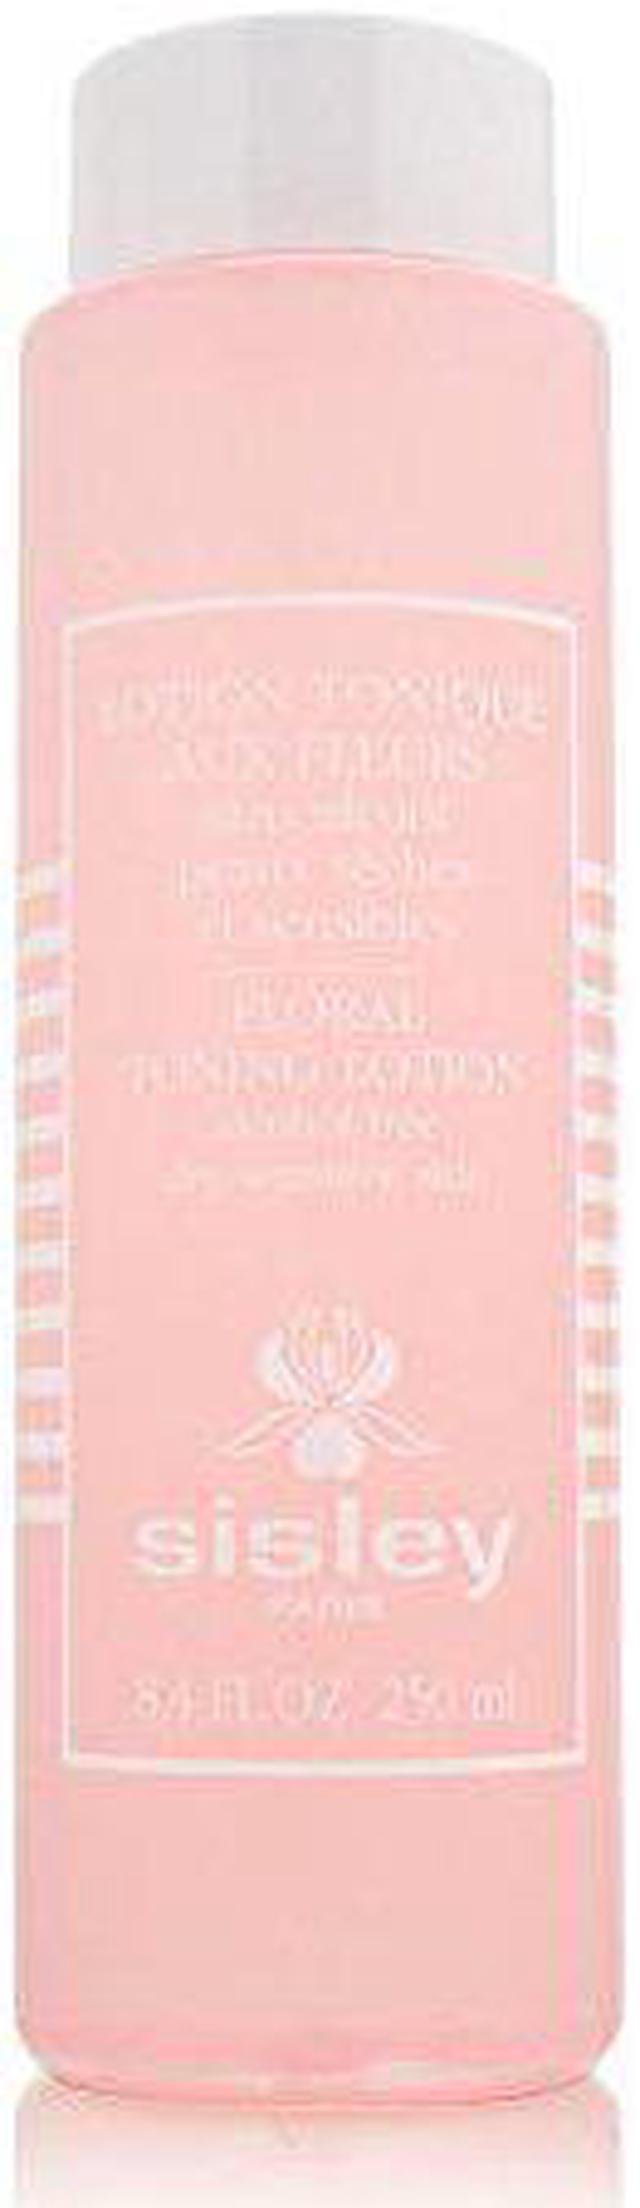 Floral Toning Lotion 8.4oz, 250ml Skincare Toners NEW Skin Care - Newegg.com